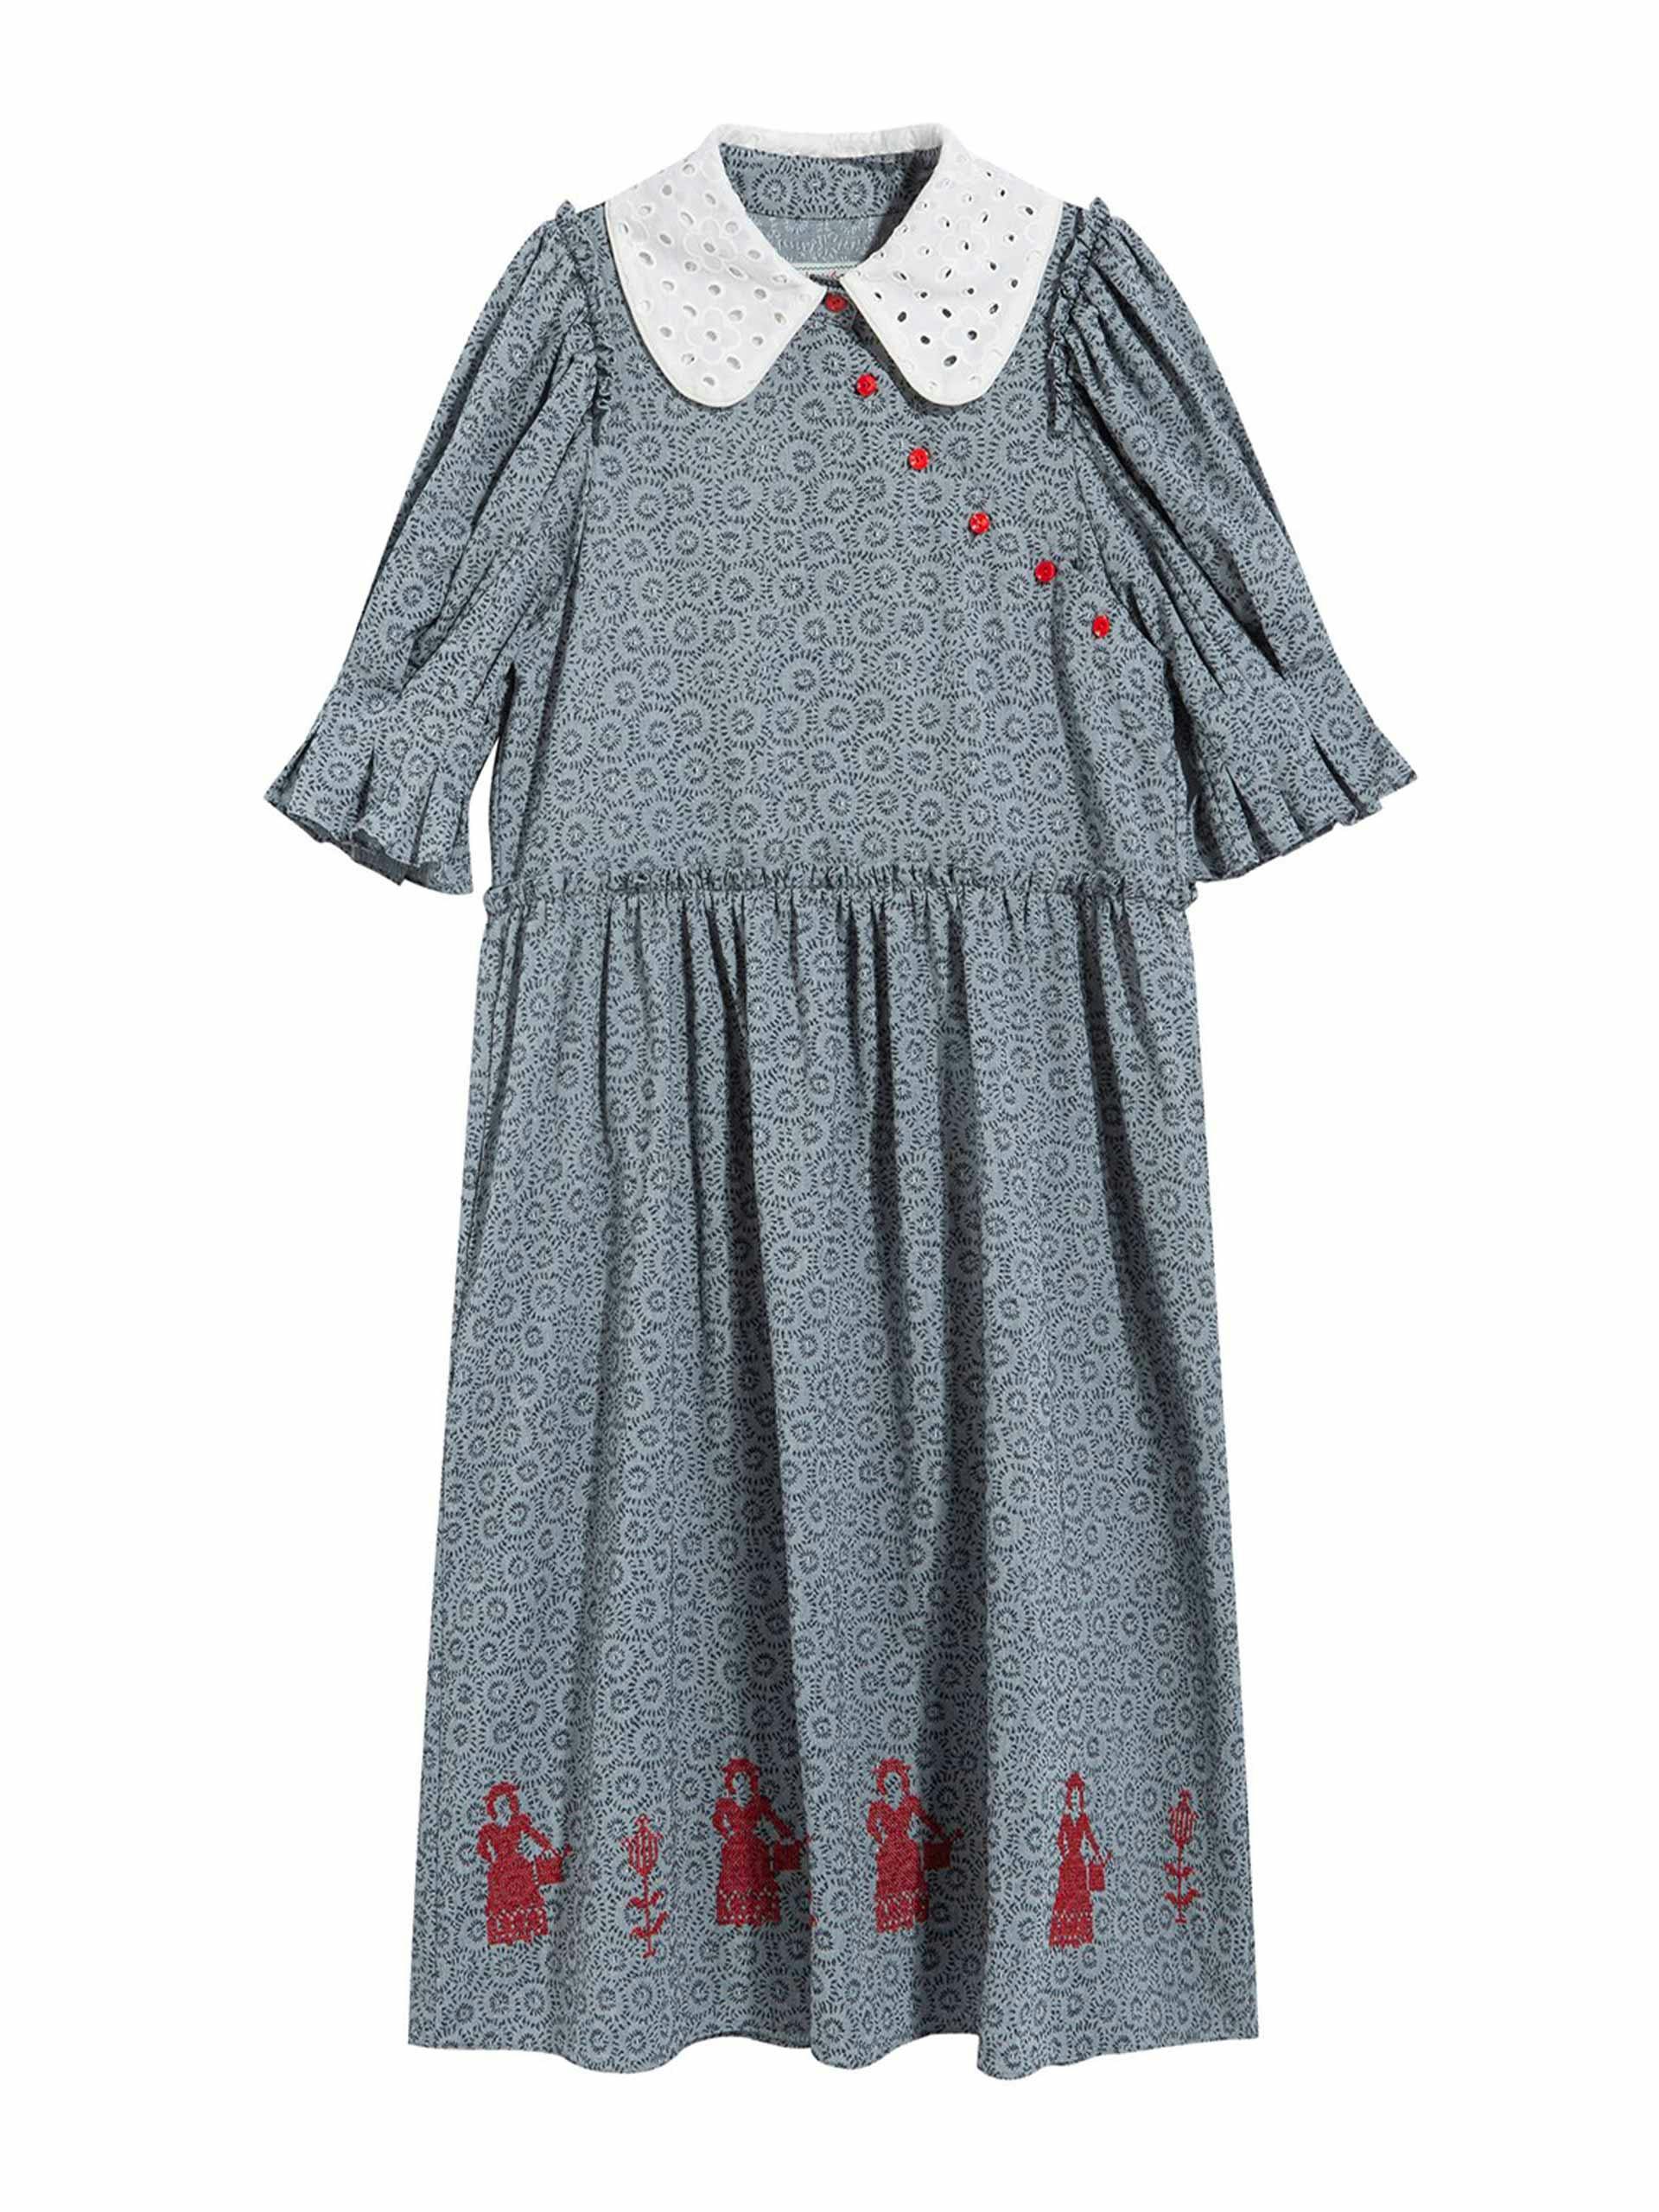 Vintage embroidery cotton dress